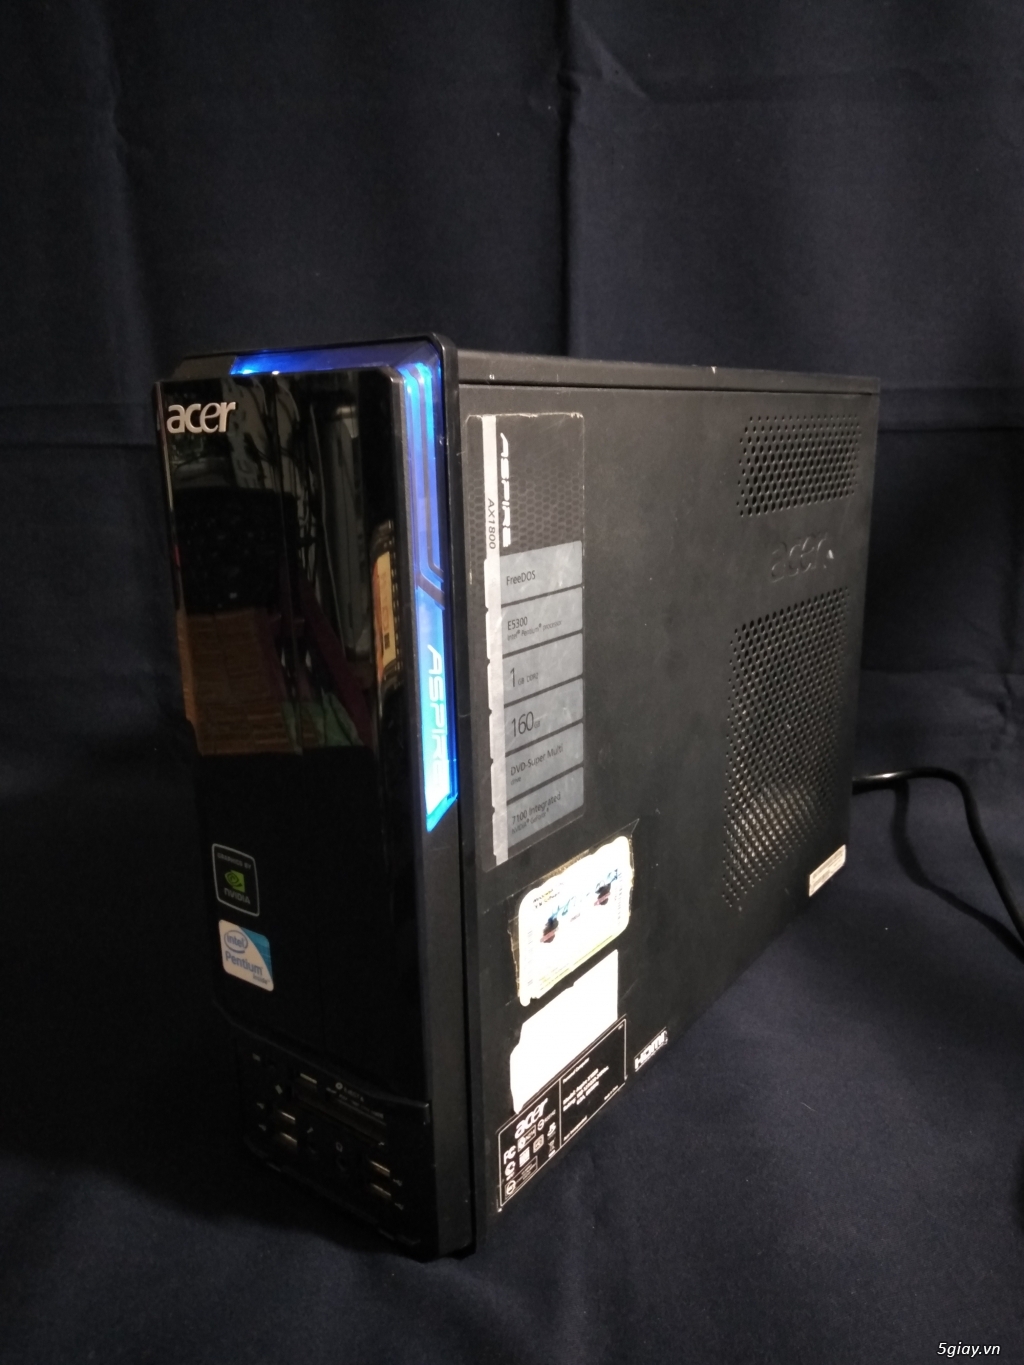 Acer aspire X1800 + Card Geforce 7100 onboard